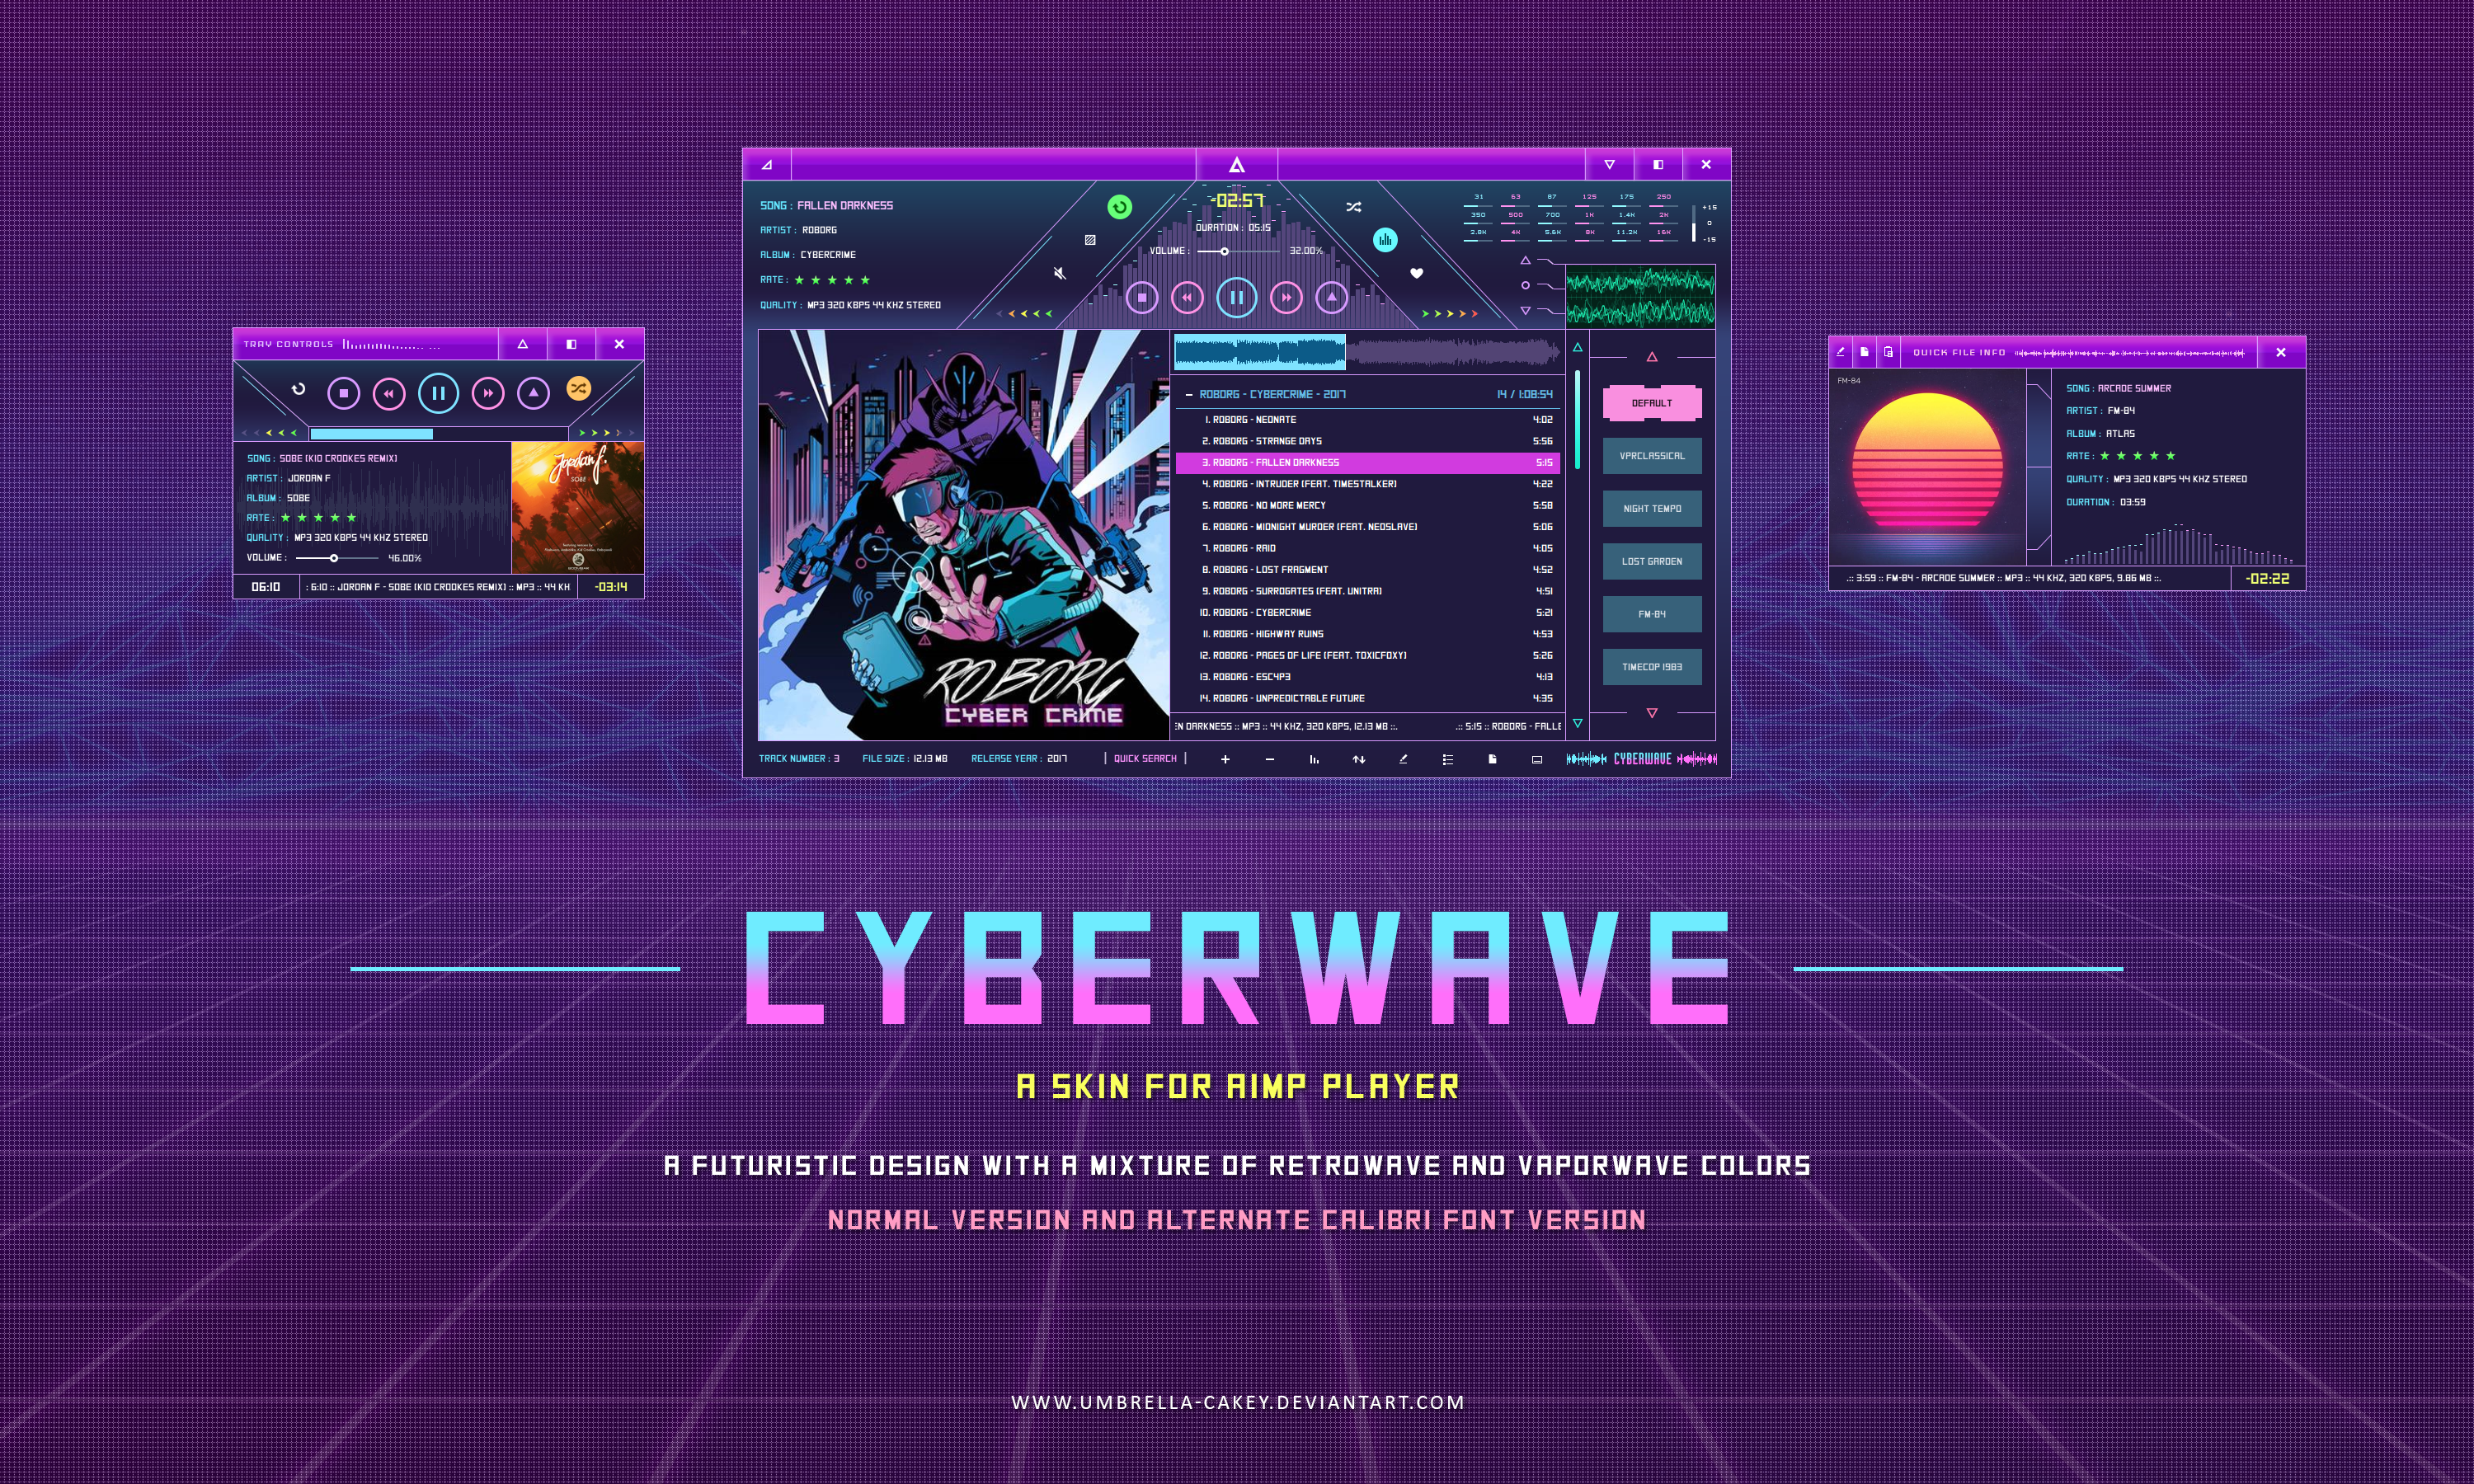 Cyberwave By Umbrella Cakey